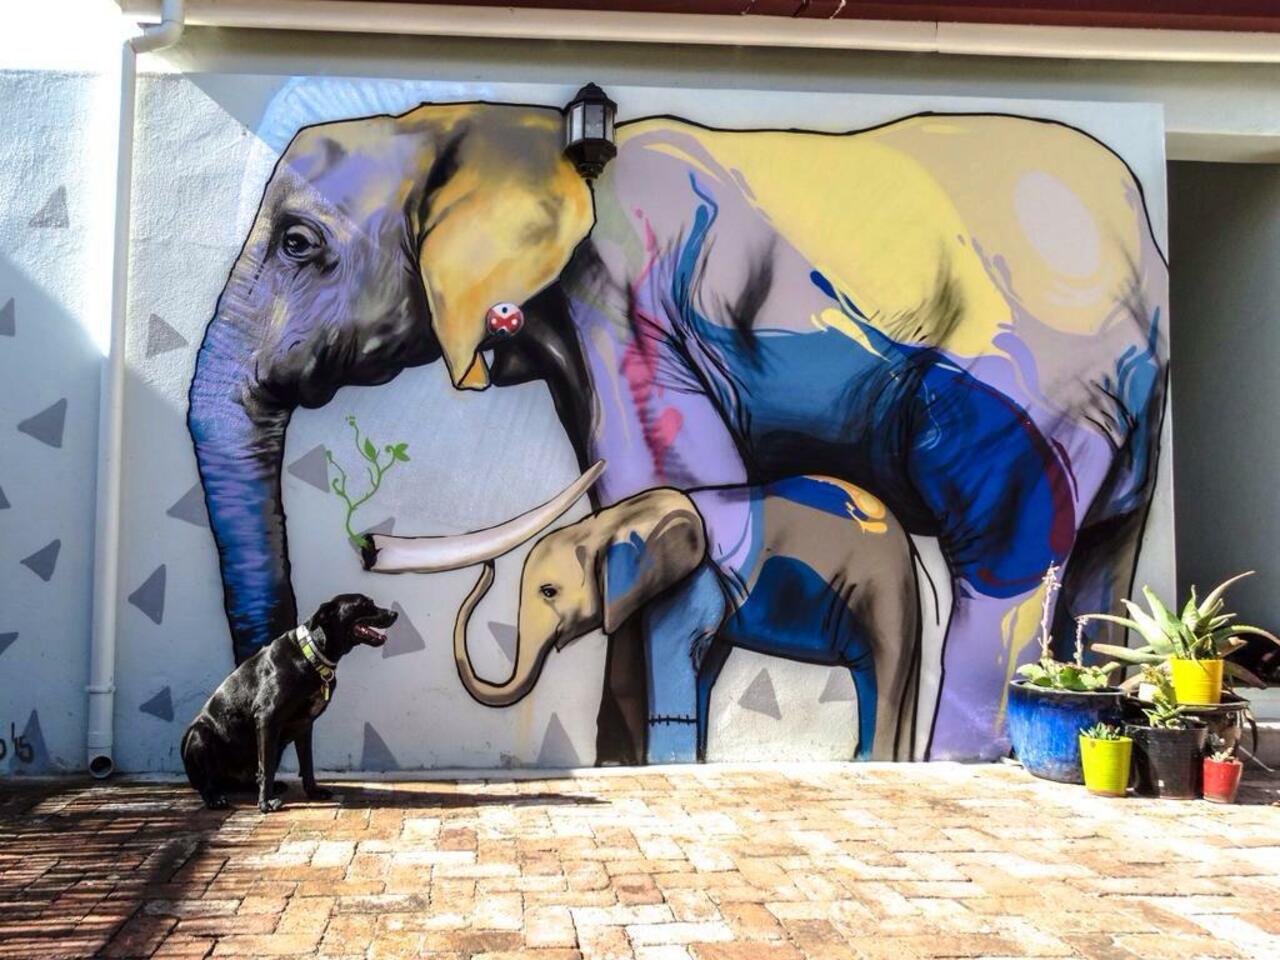 Latest nature in Street Art piece by Falko Paints In Cape Town

#art #mural #graffiti #streetart http://t.co/erDKnMjskY